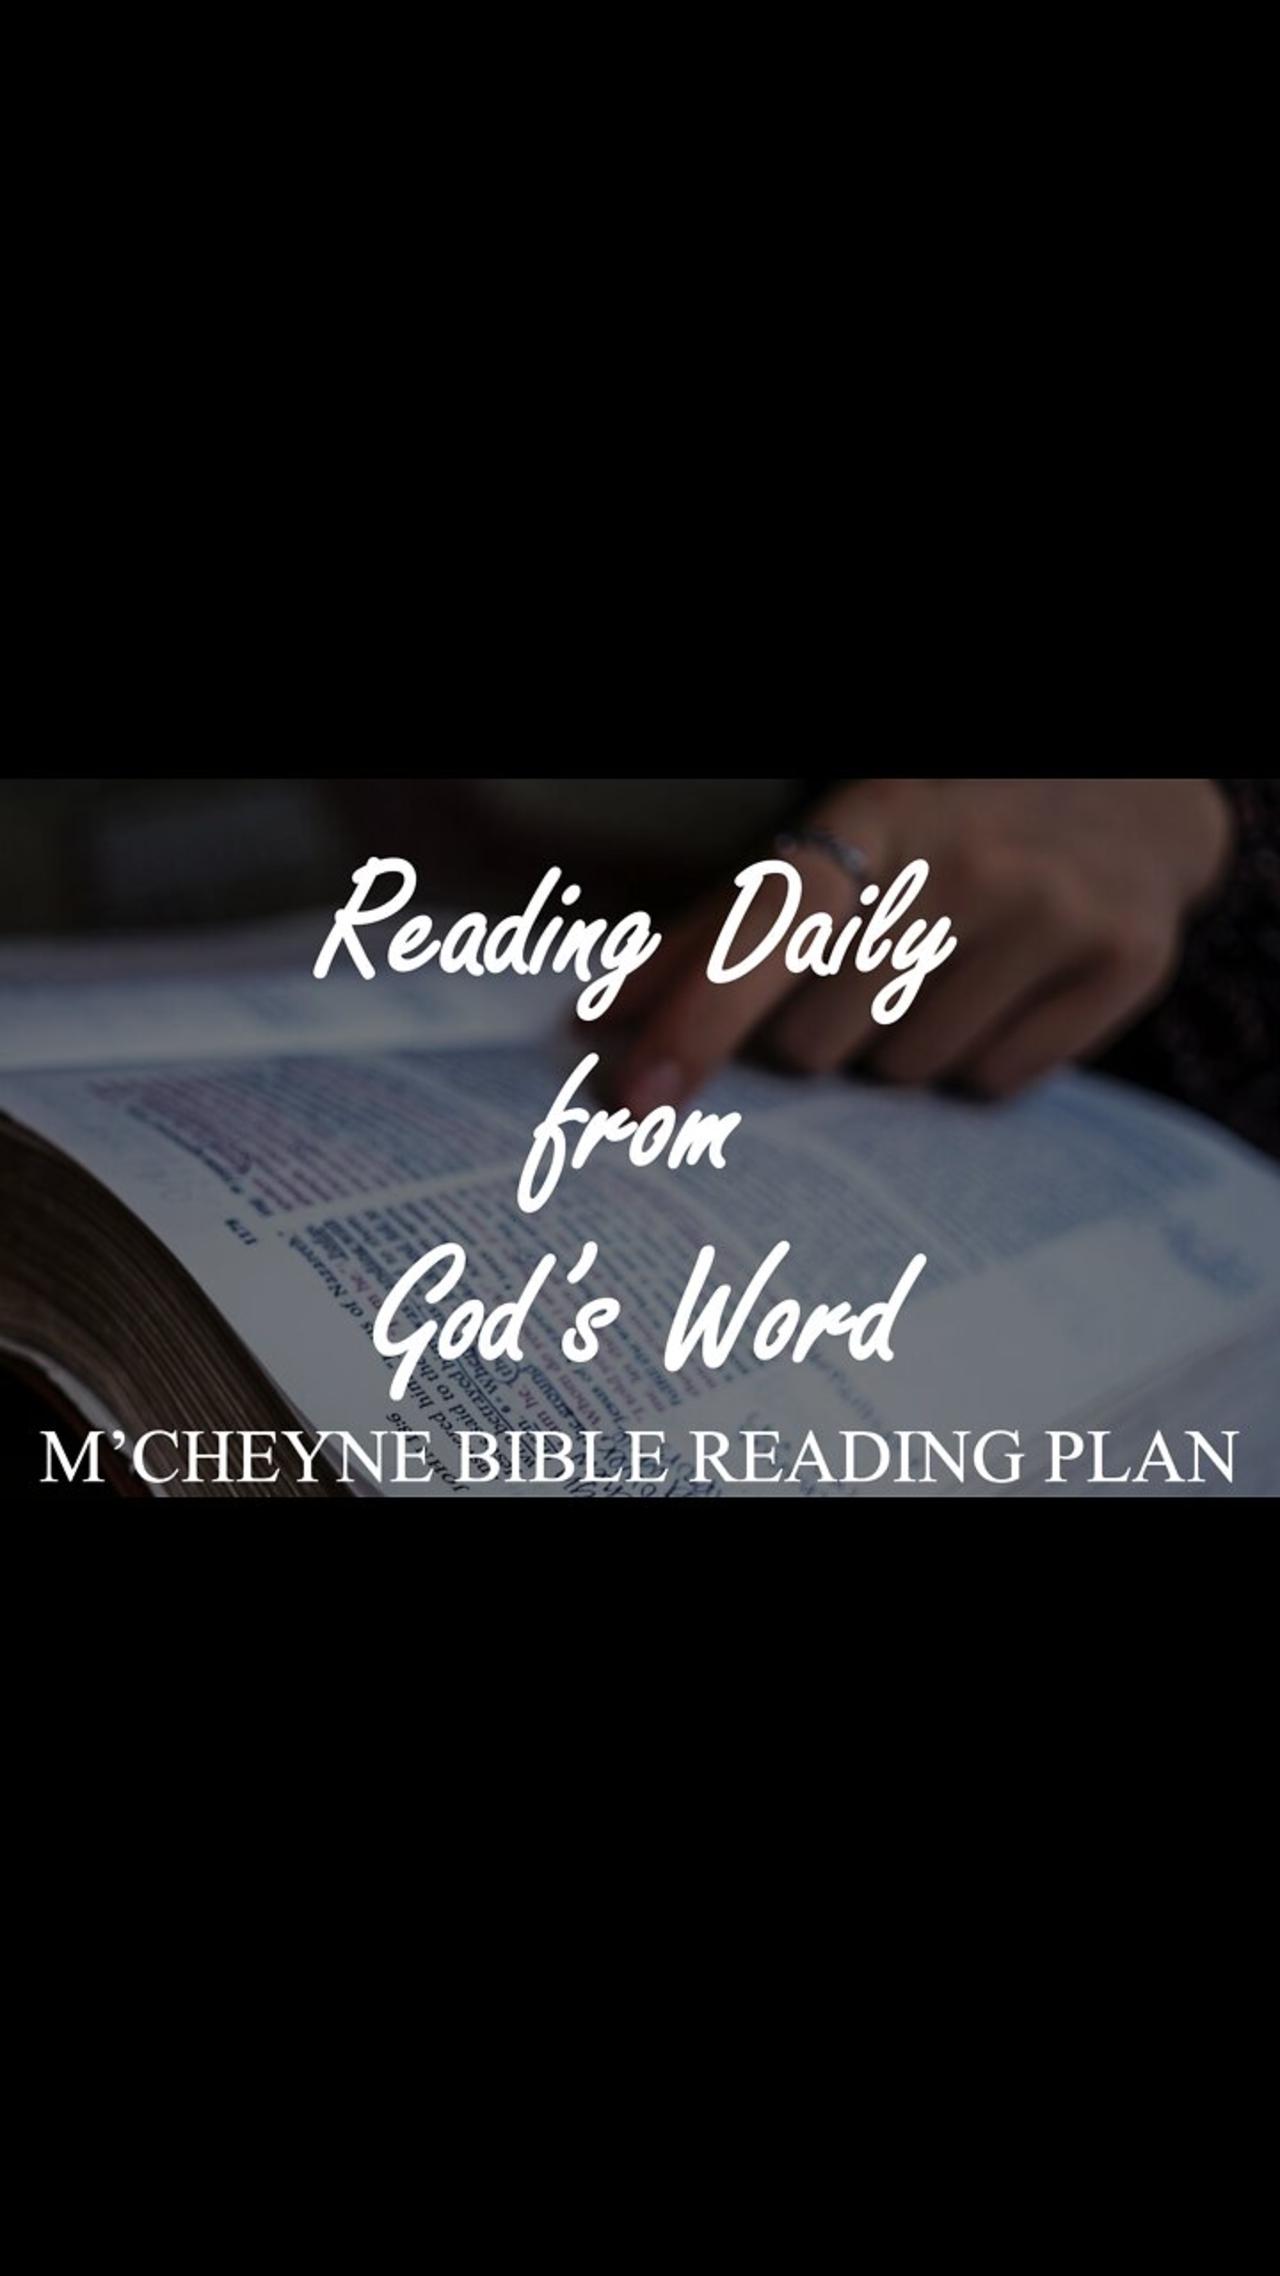 M’CHEYNE BIBLE READING PLAN - August 10